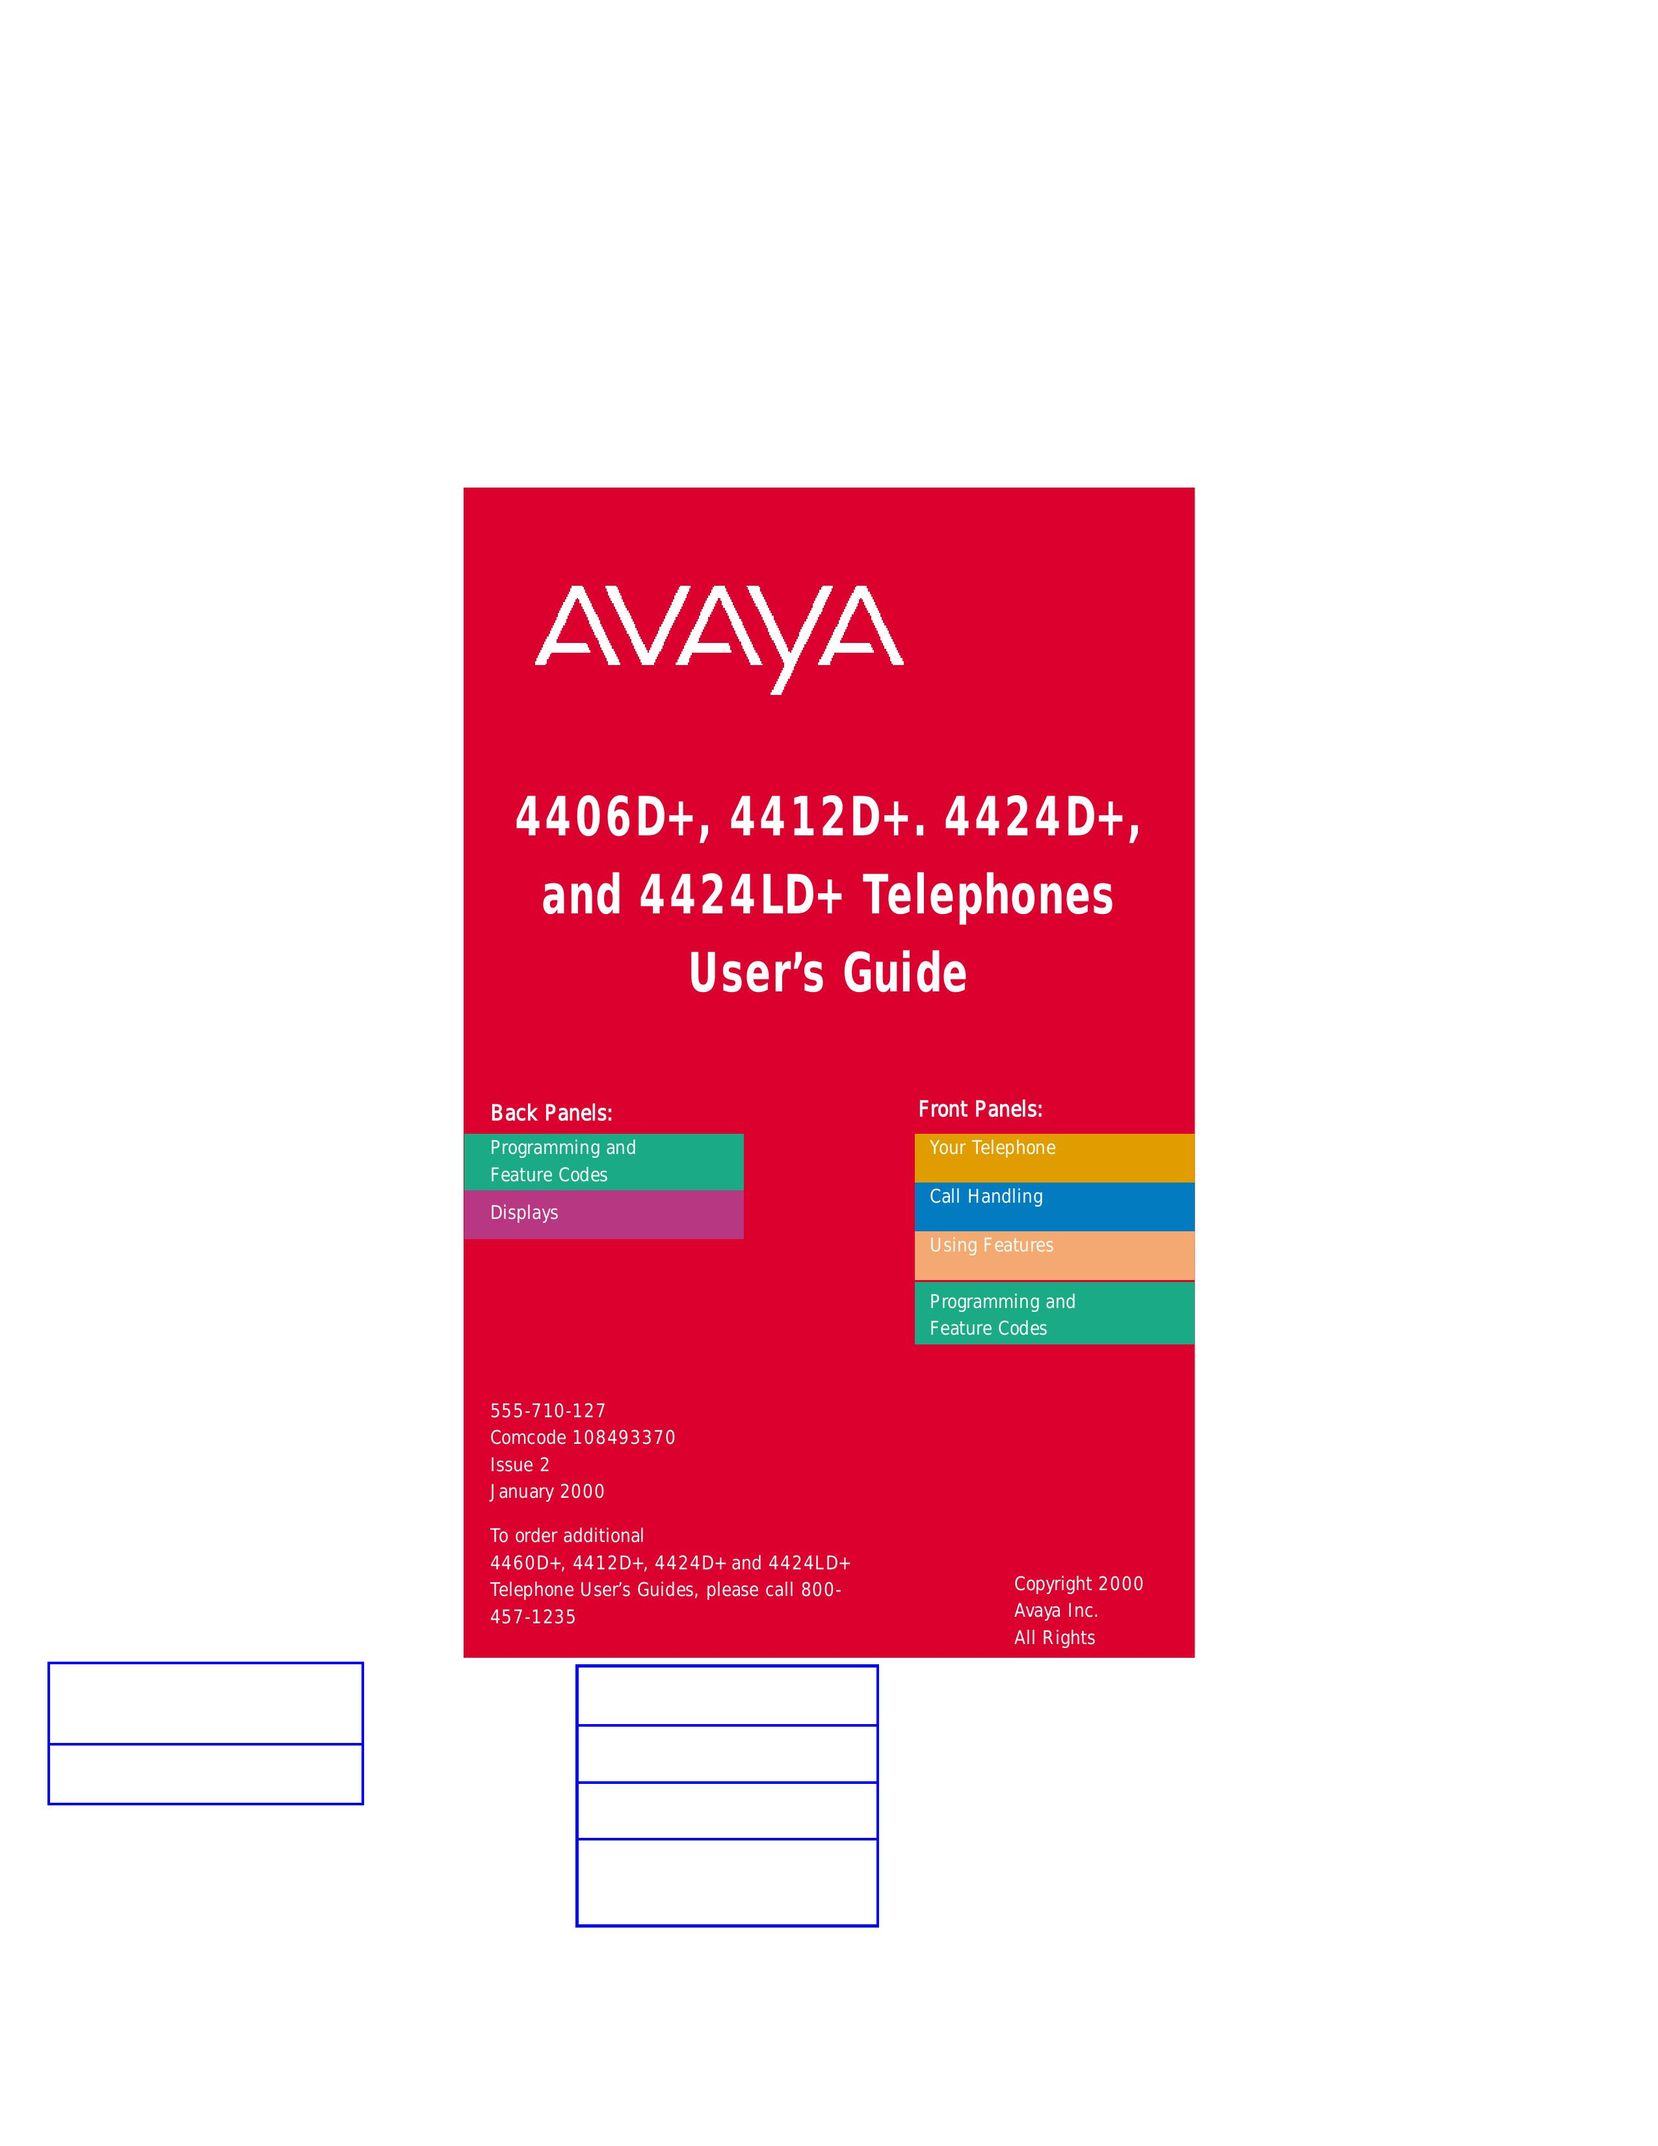 Avaya 4424LD+ Telephone User Manual